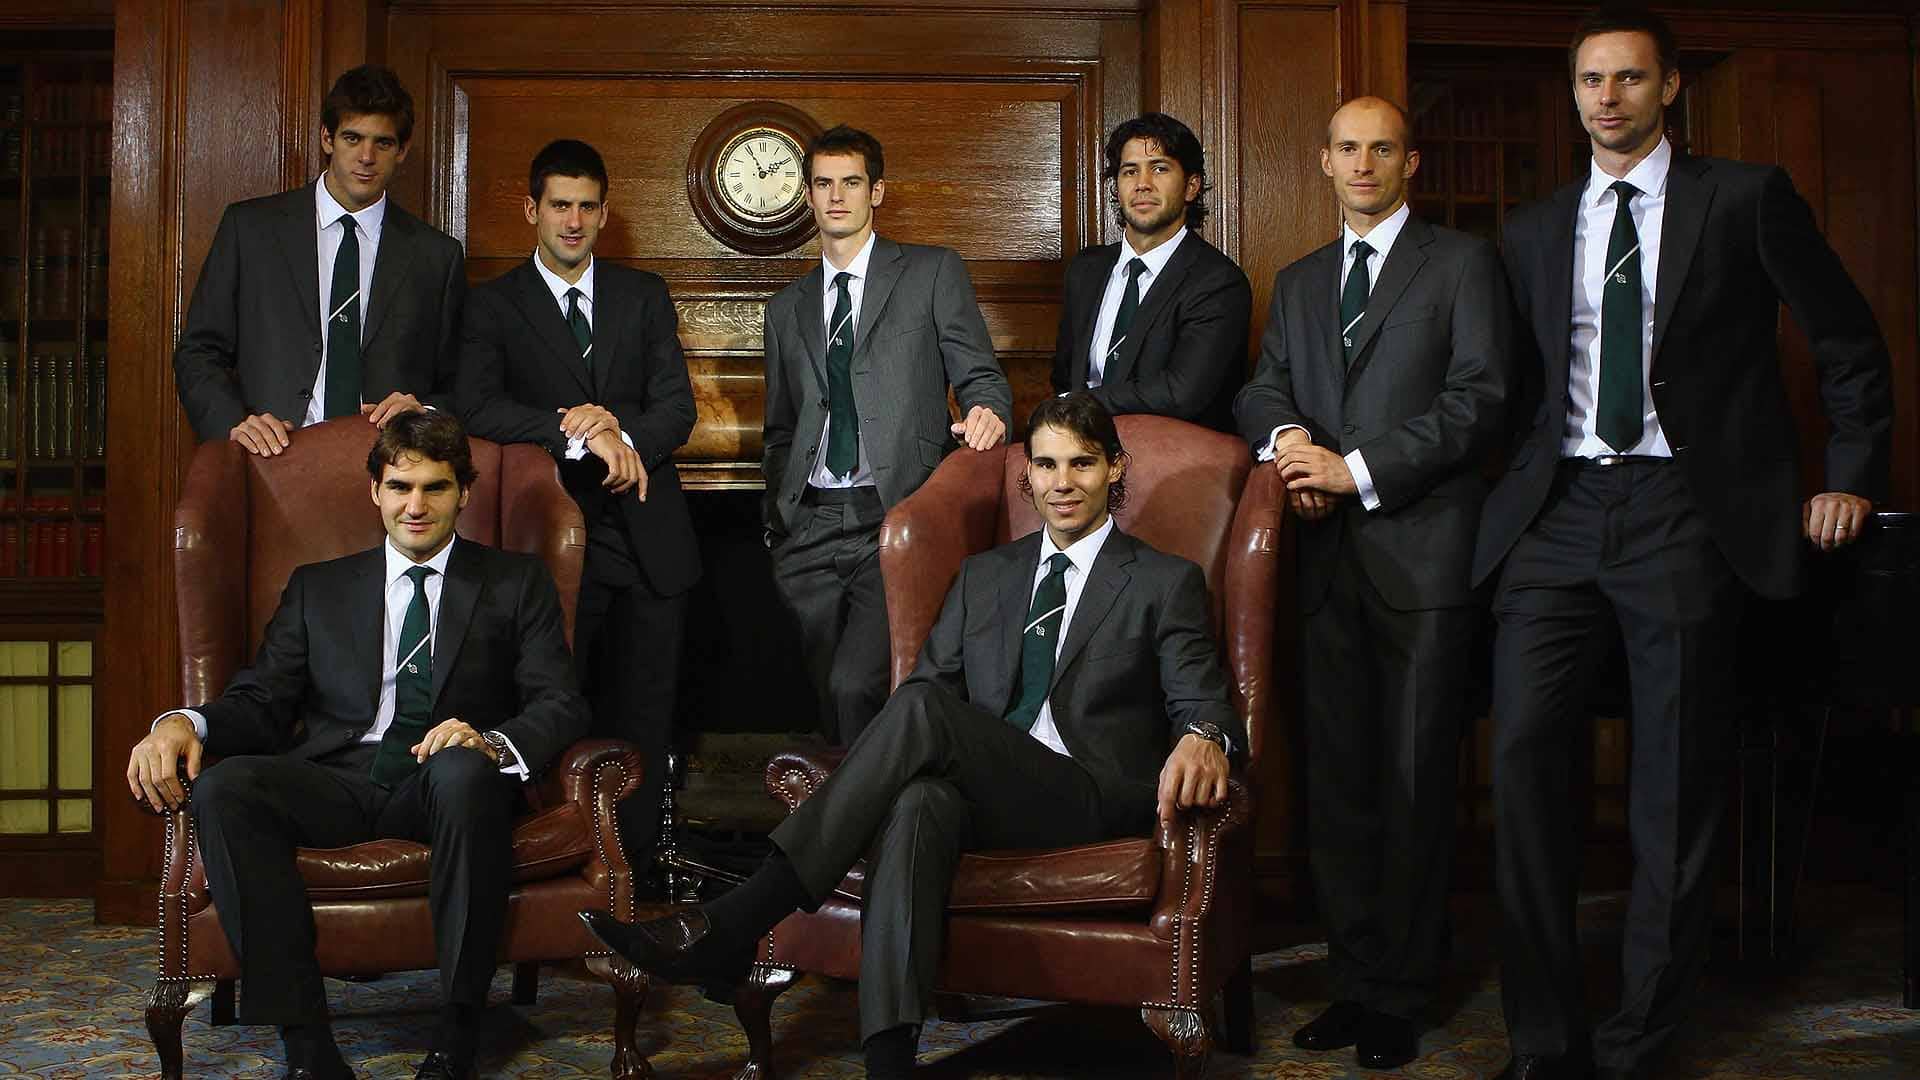 Federer, Nadal (both seated, Del Potro, Djokovic, Murray, Verdasco, Davydenko, Soderling